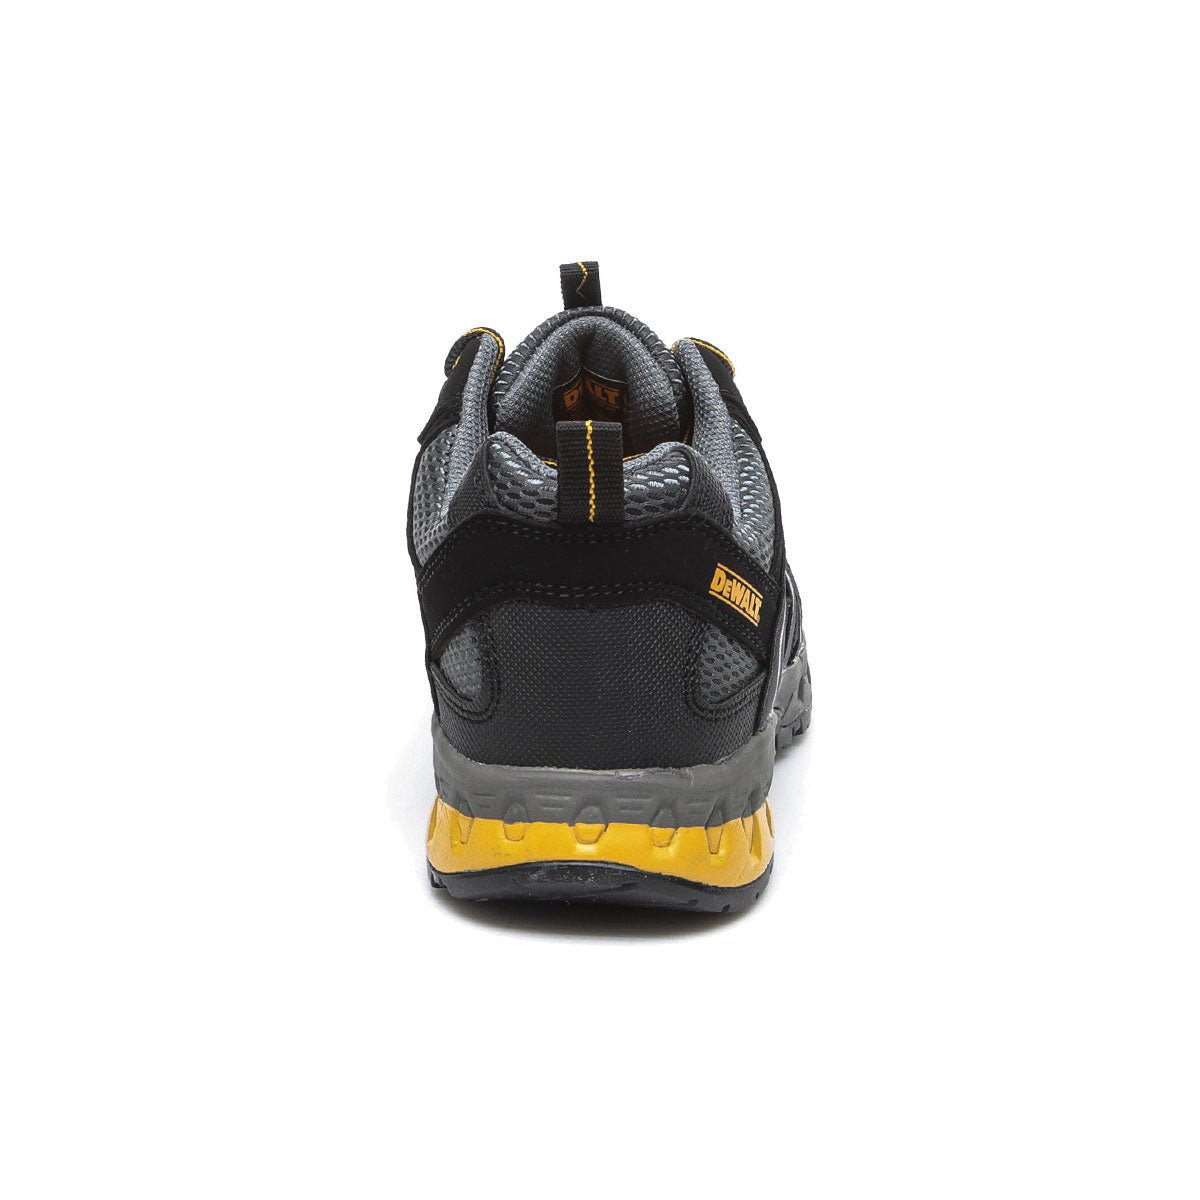 DeWalt Cutter Steel Toe Cap Safety Trainers - Shoe Store Direct